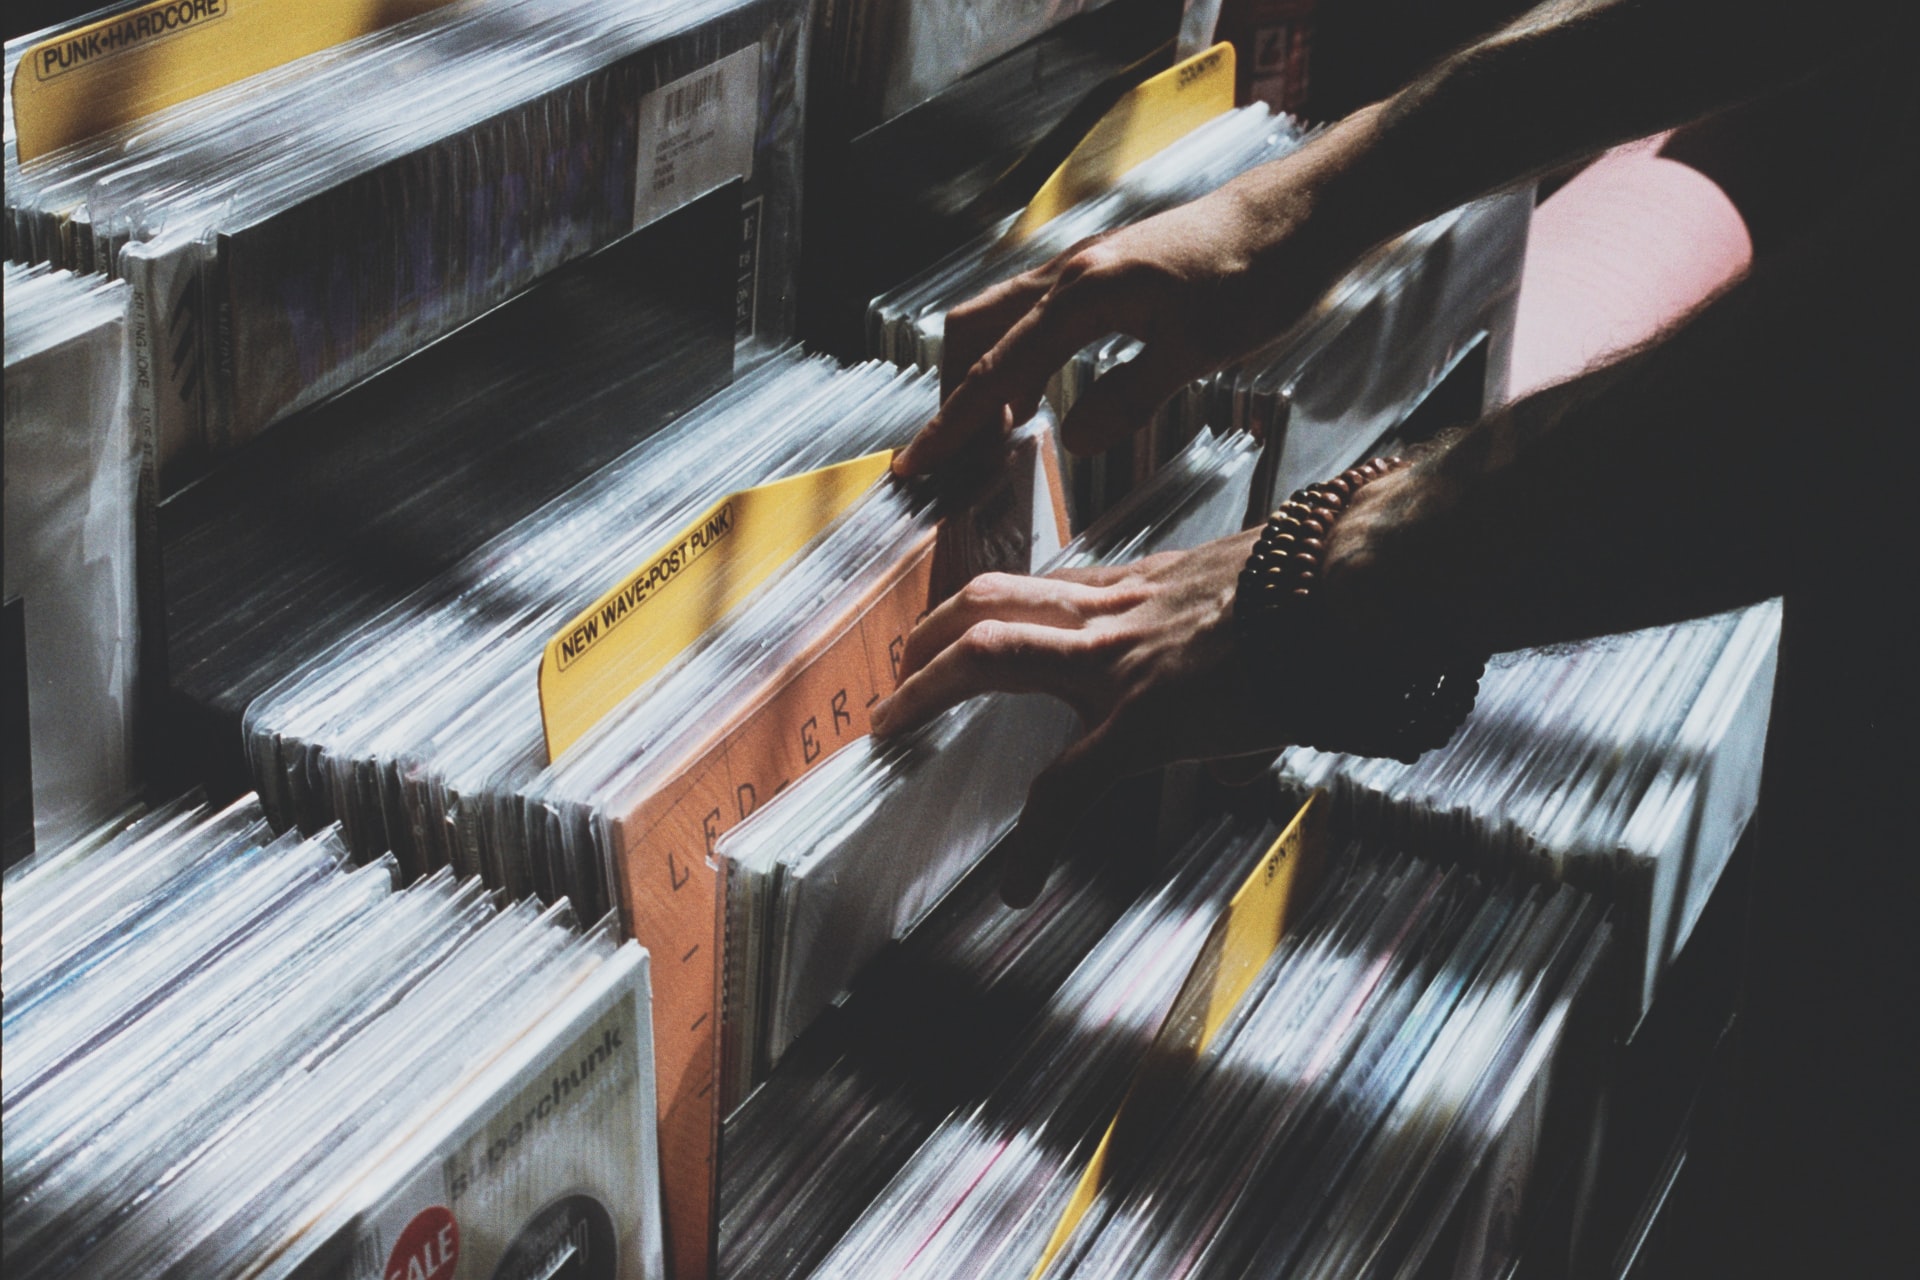 A person looks through vinyl records